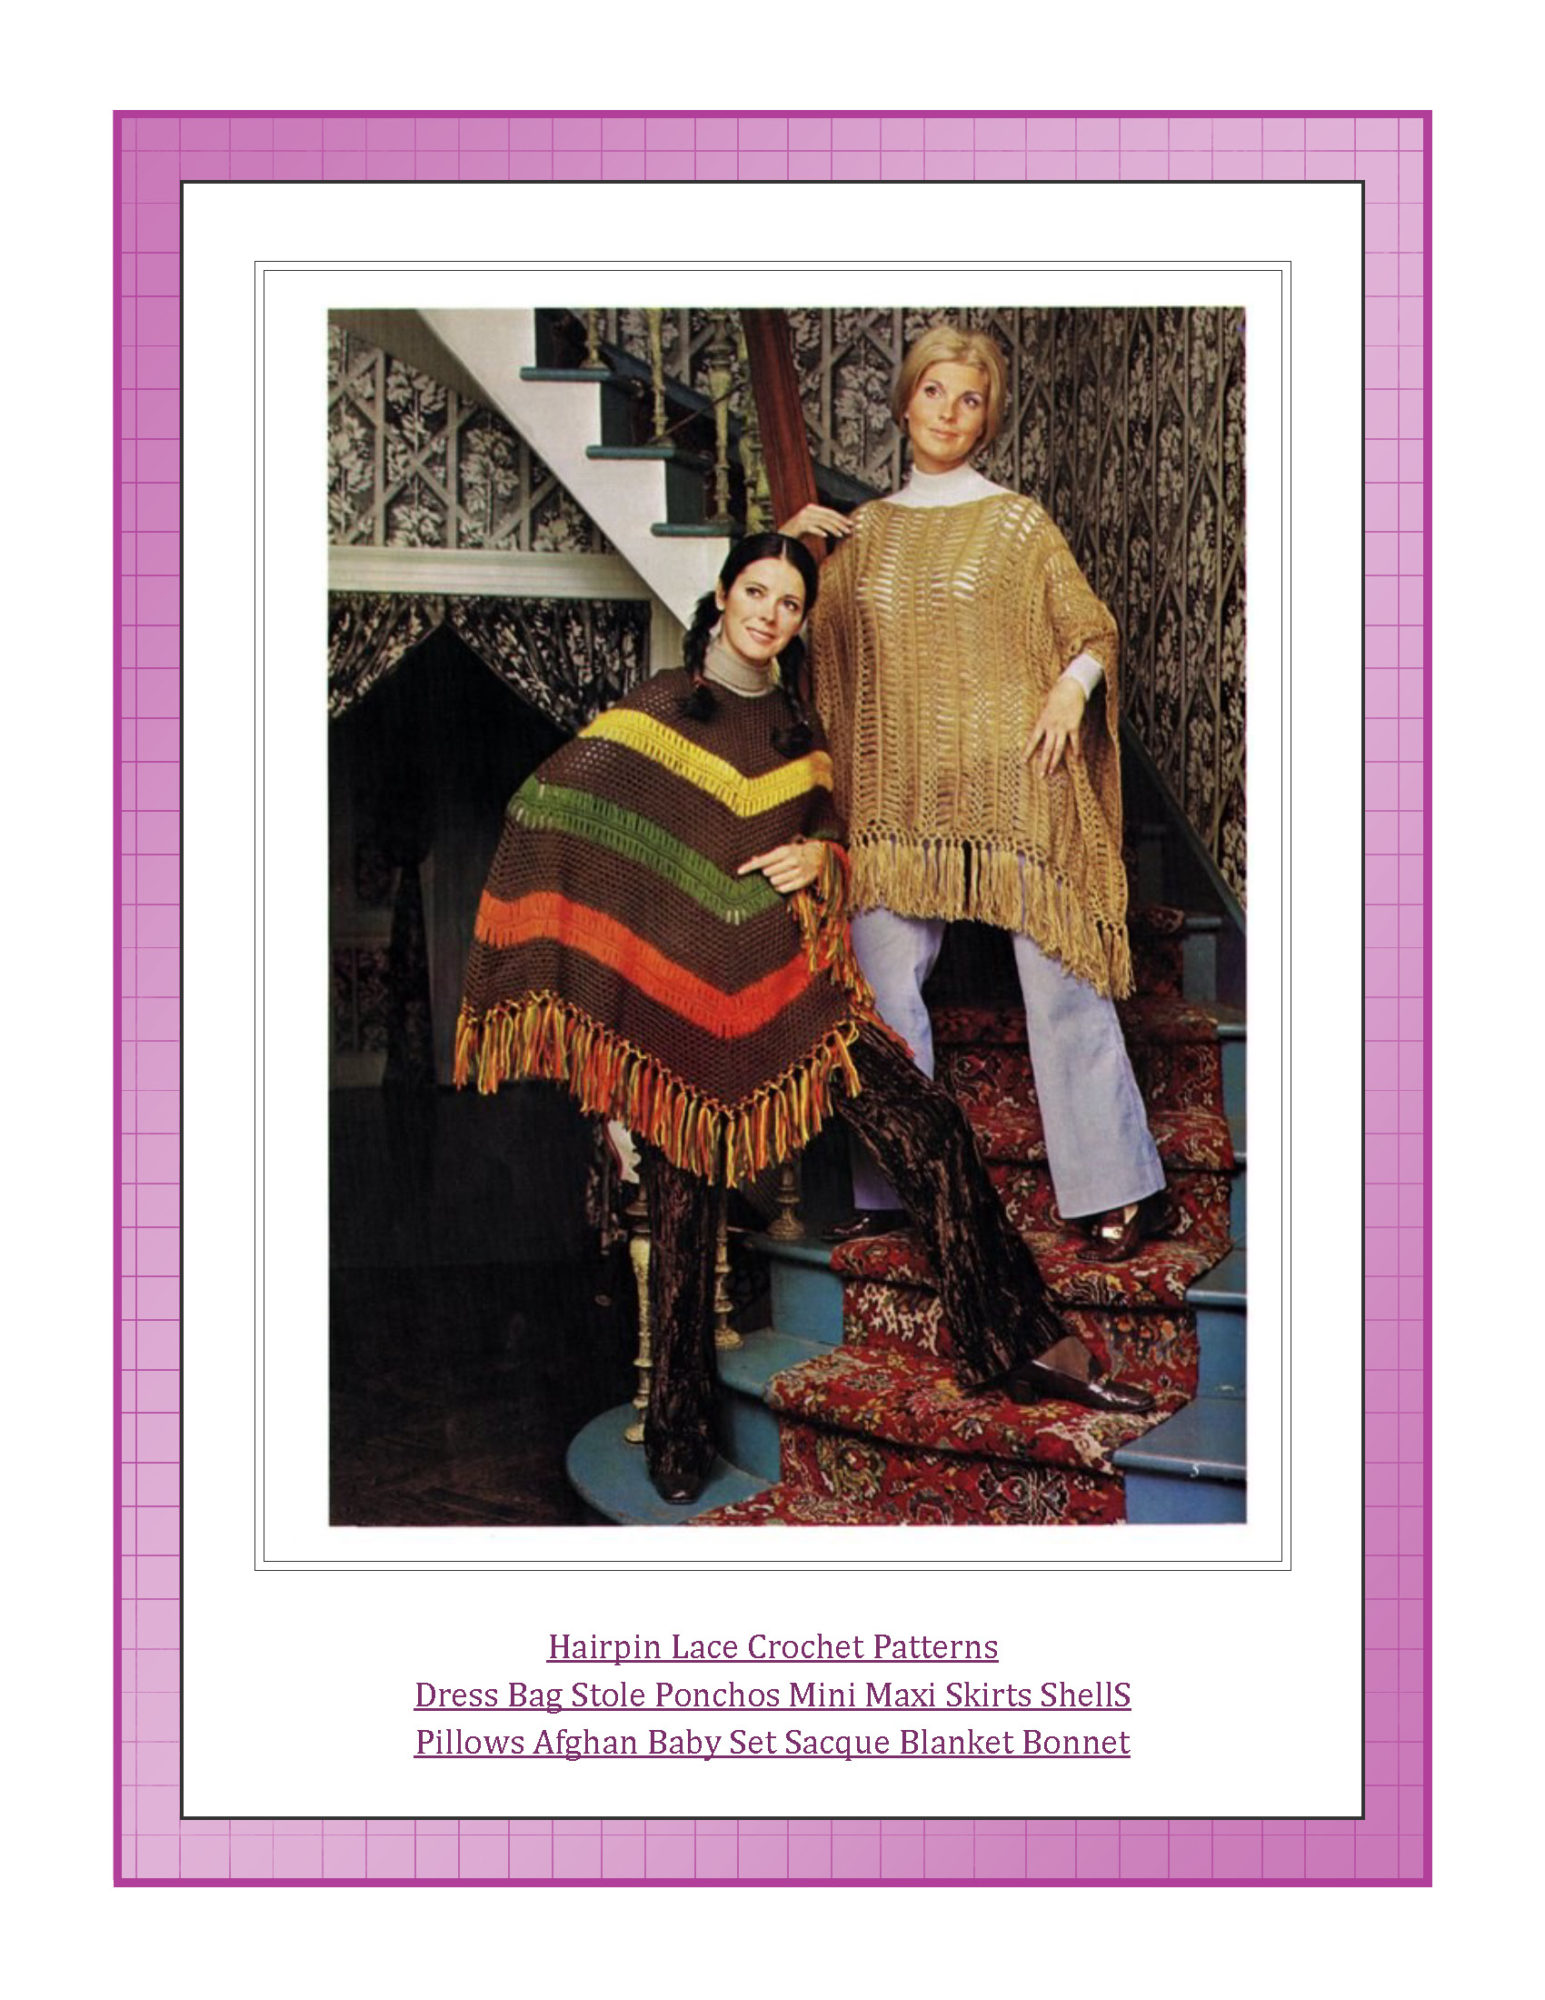 Hairpin Lace Crochet Patterns Dress Bag Stole Ponchos Mini Maxi Skirts Shells Pillows Afghan Baby Set Sacque Blanket Bonnet 